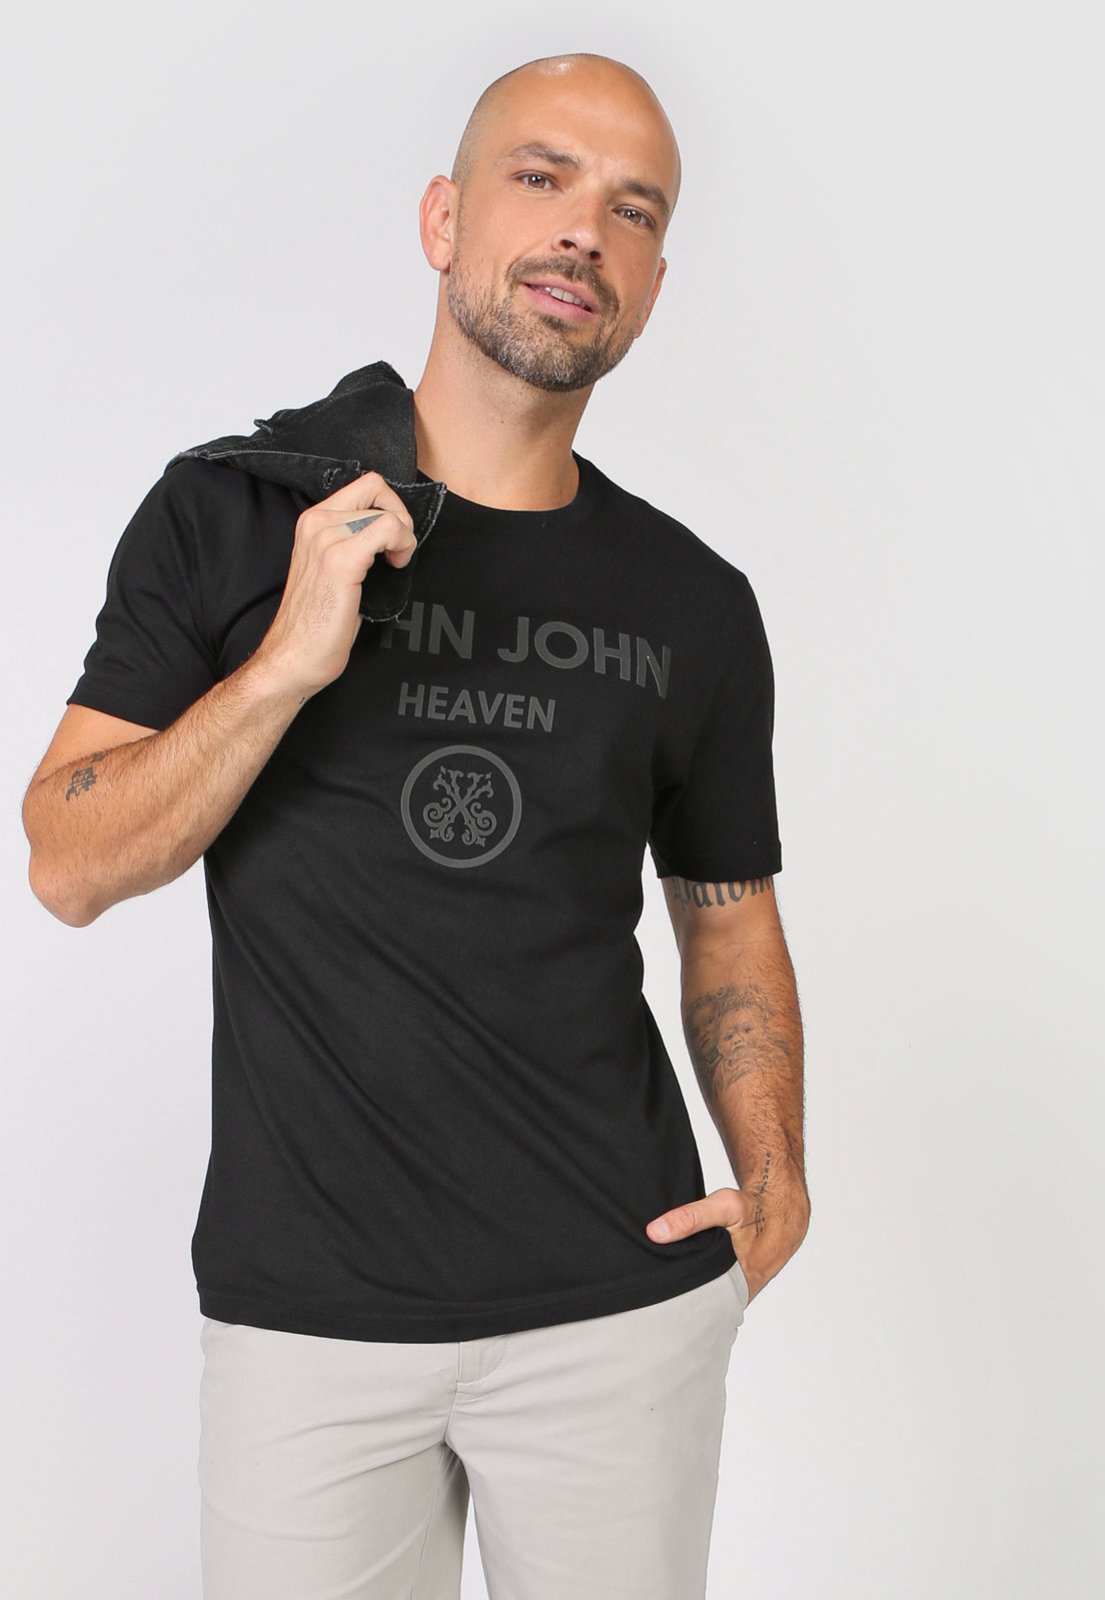 Camiseta John John Heaven Transfer Masculina